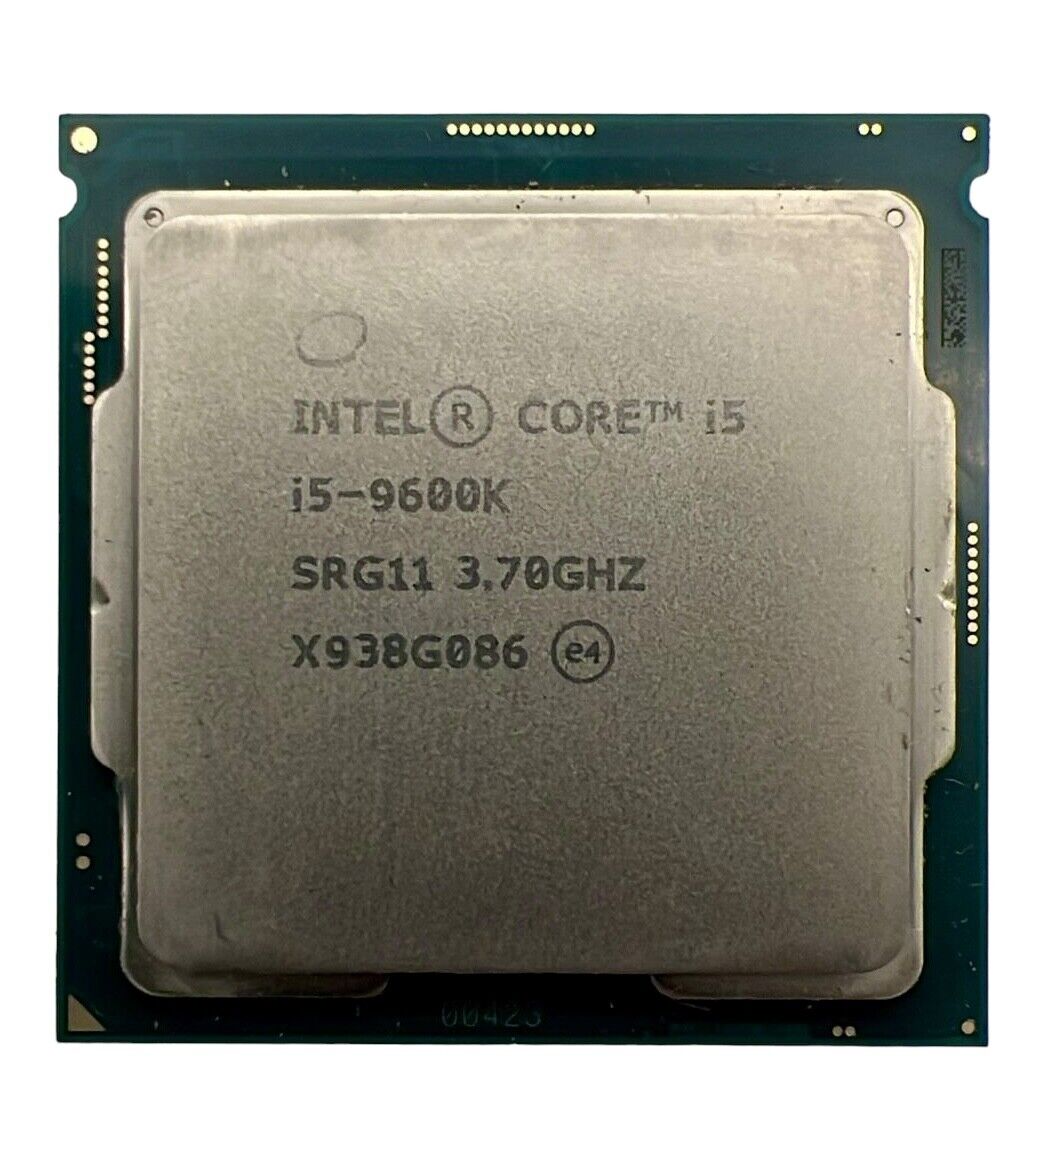 Intel Core i5-9600K 3.7GHz Six-Core CPU Processor SRG11 LGA1151 Socket